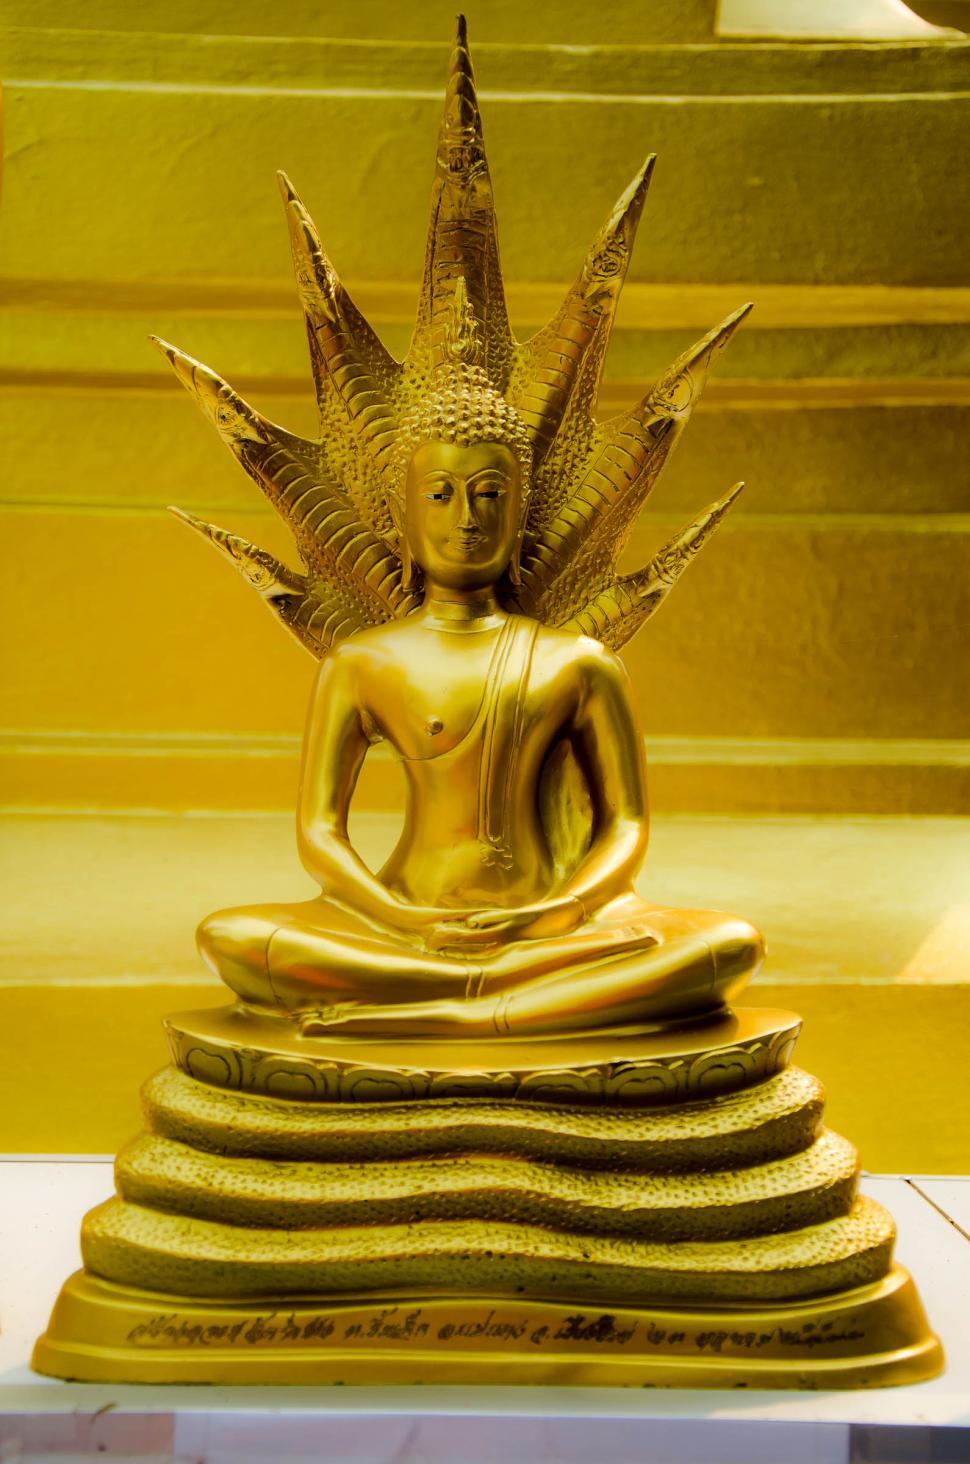 Free Image of Statue of Buddha 